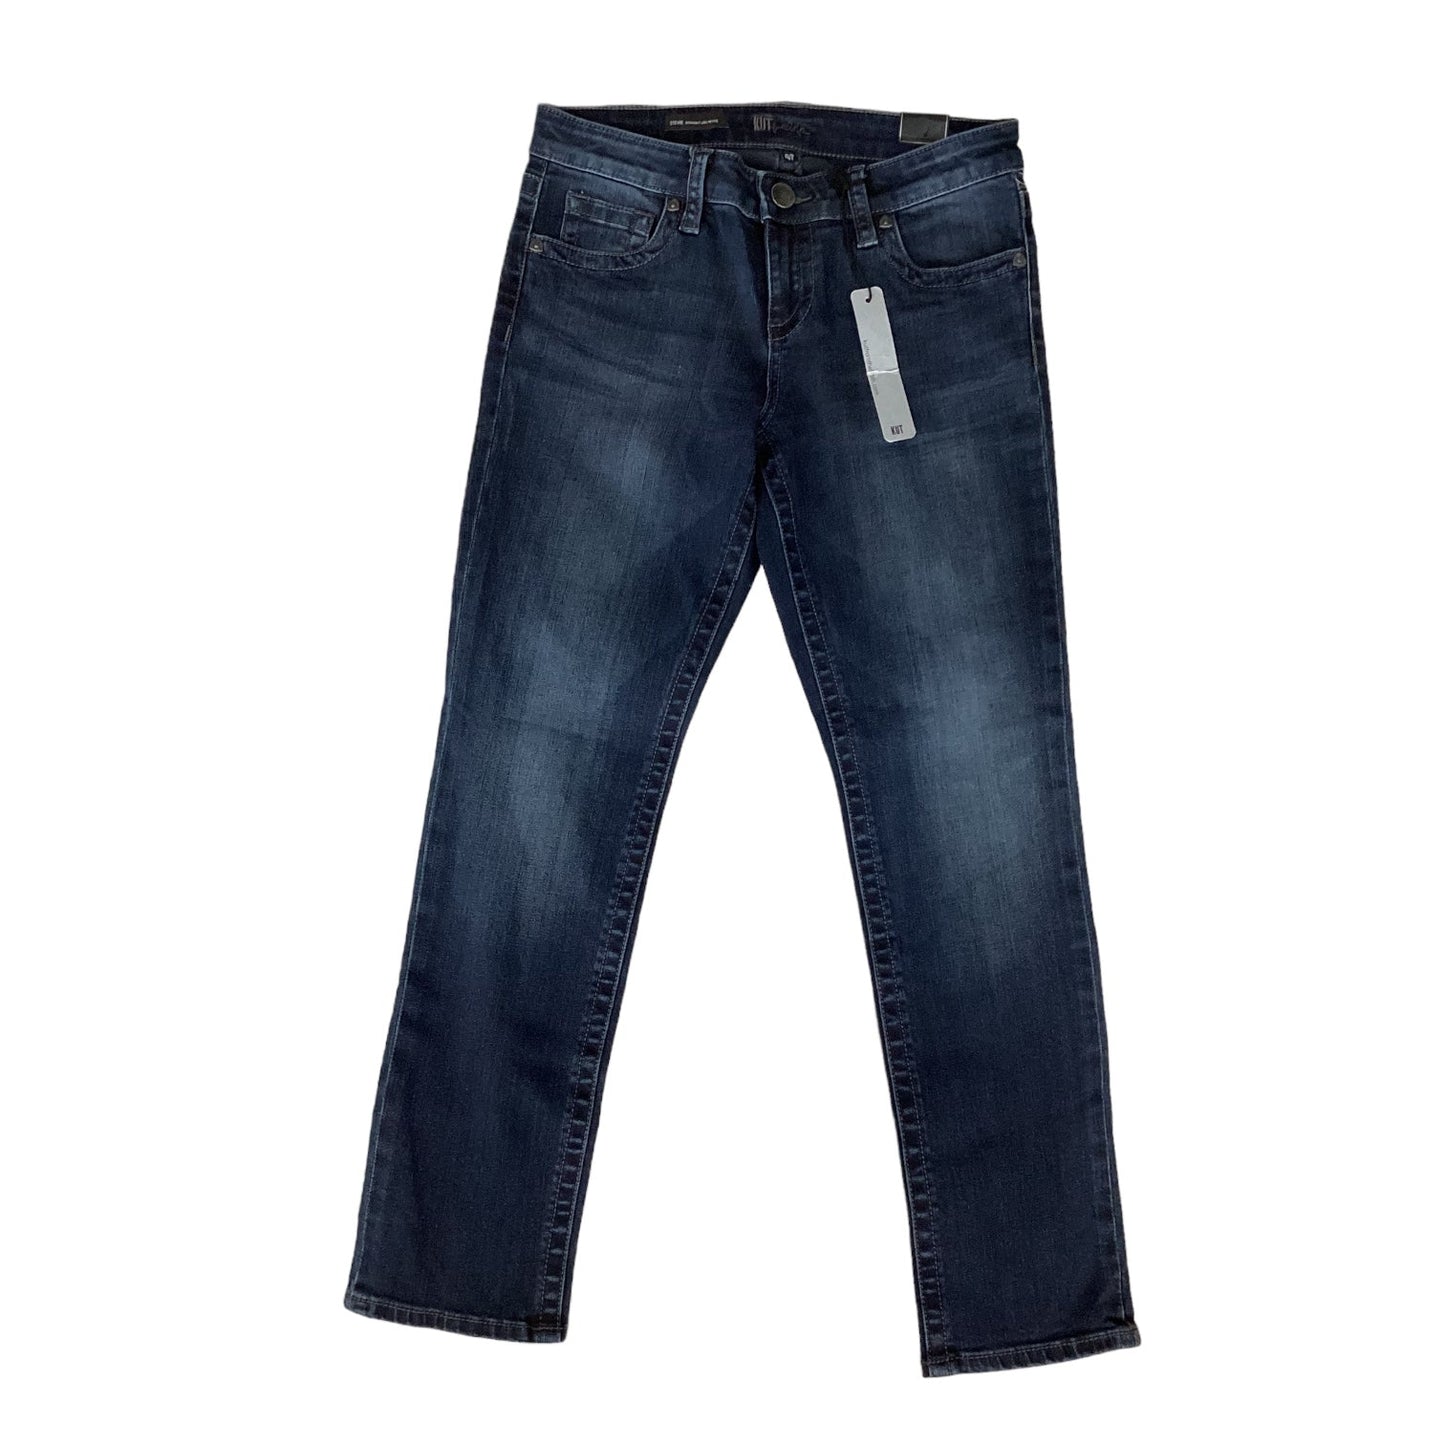 Blue Denim Jeans Designer Kut, Size 4petite